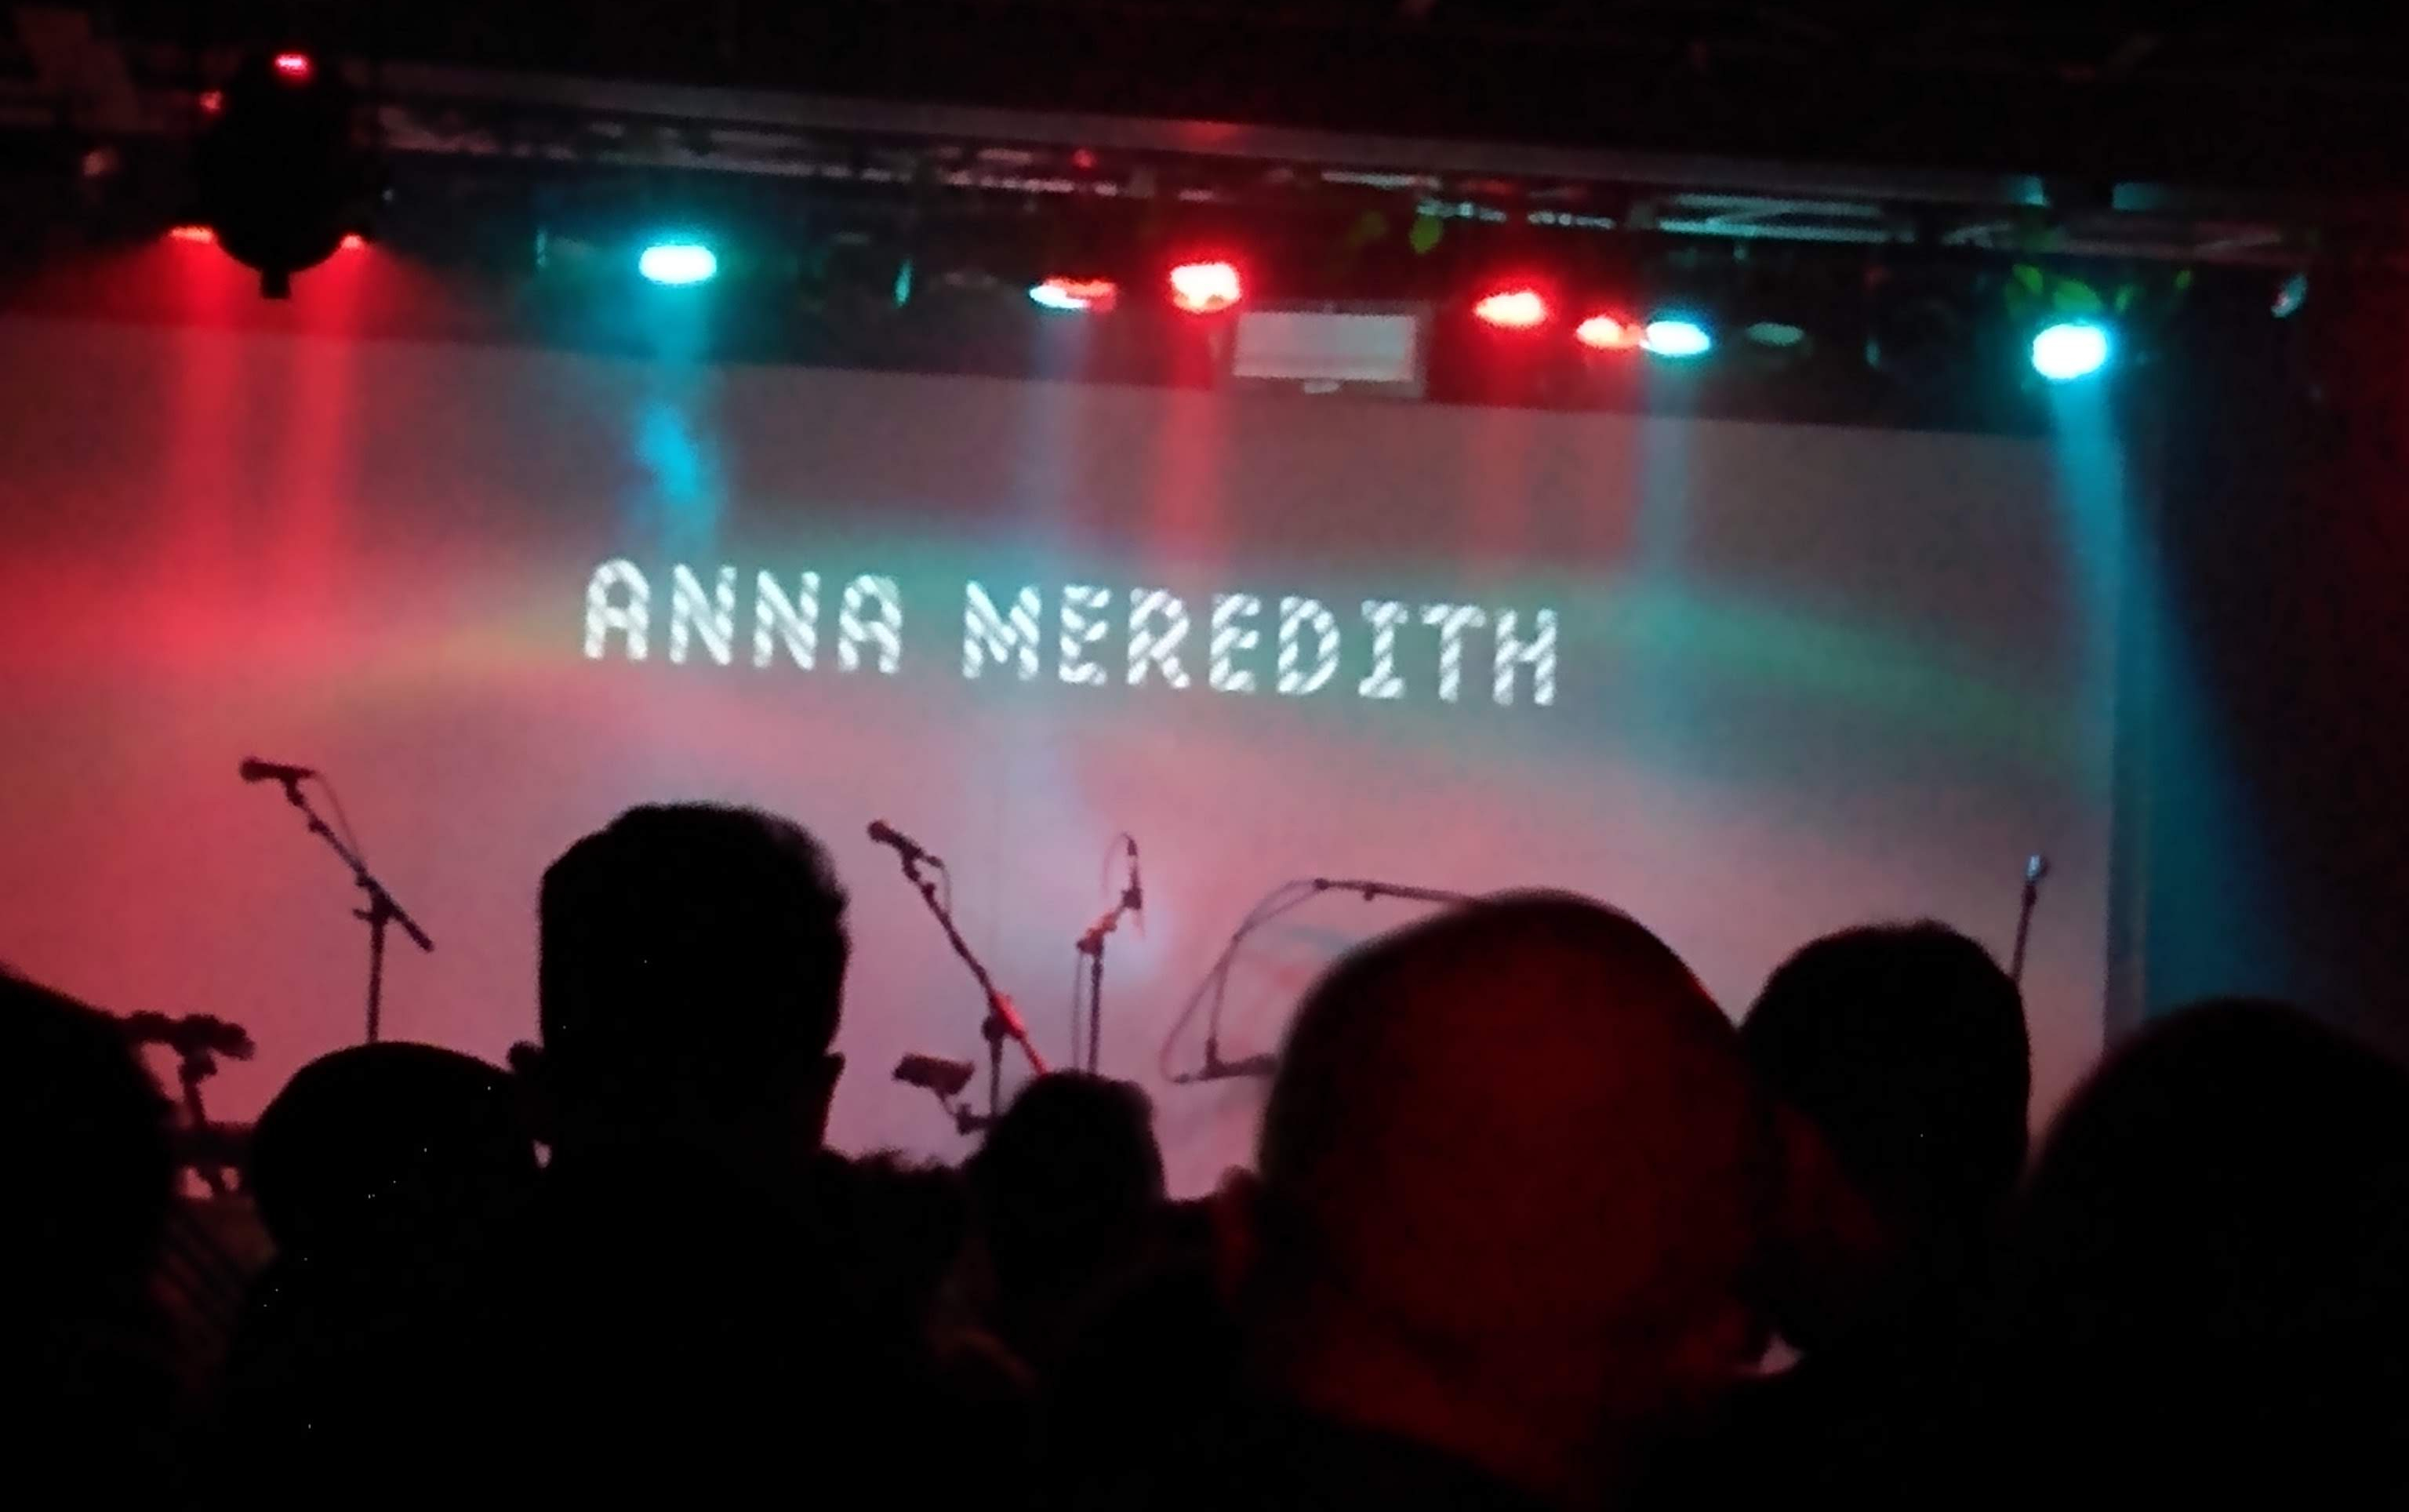 Anna Meredith